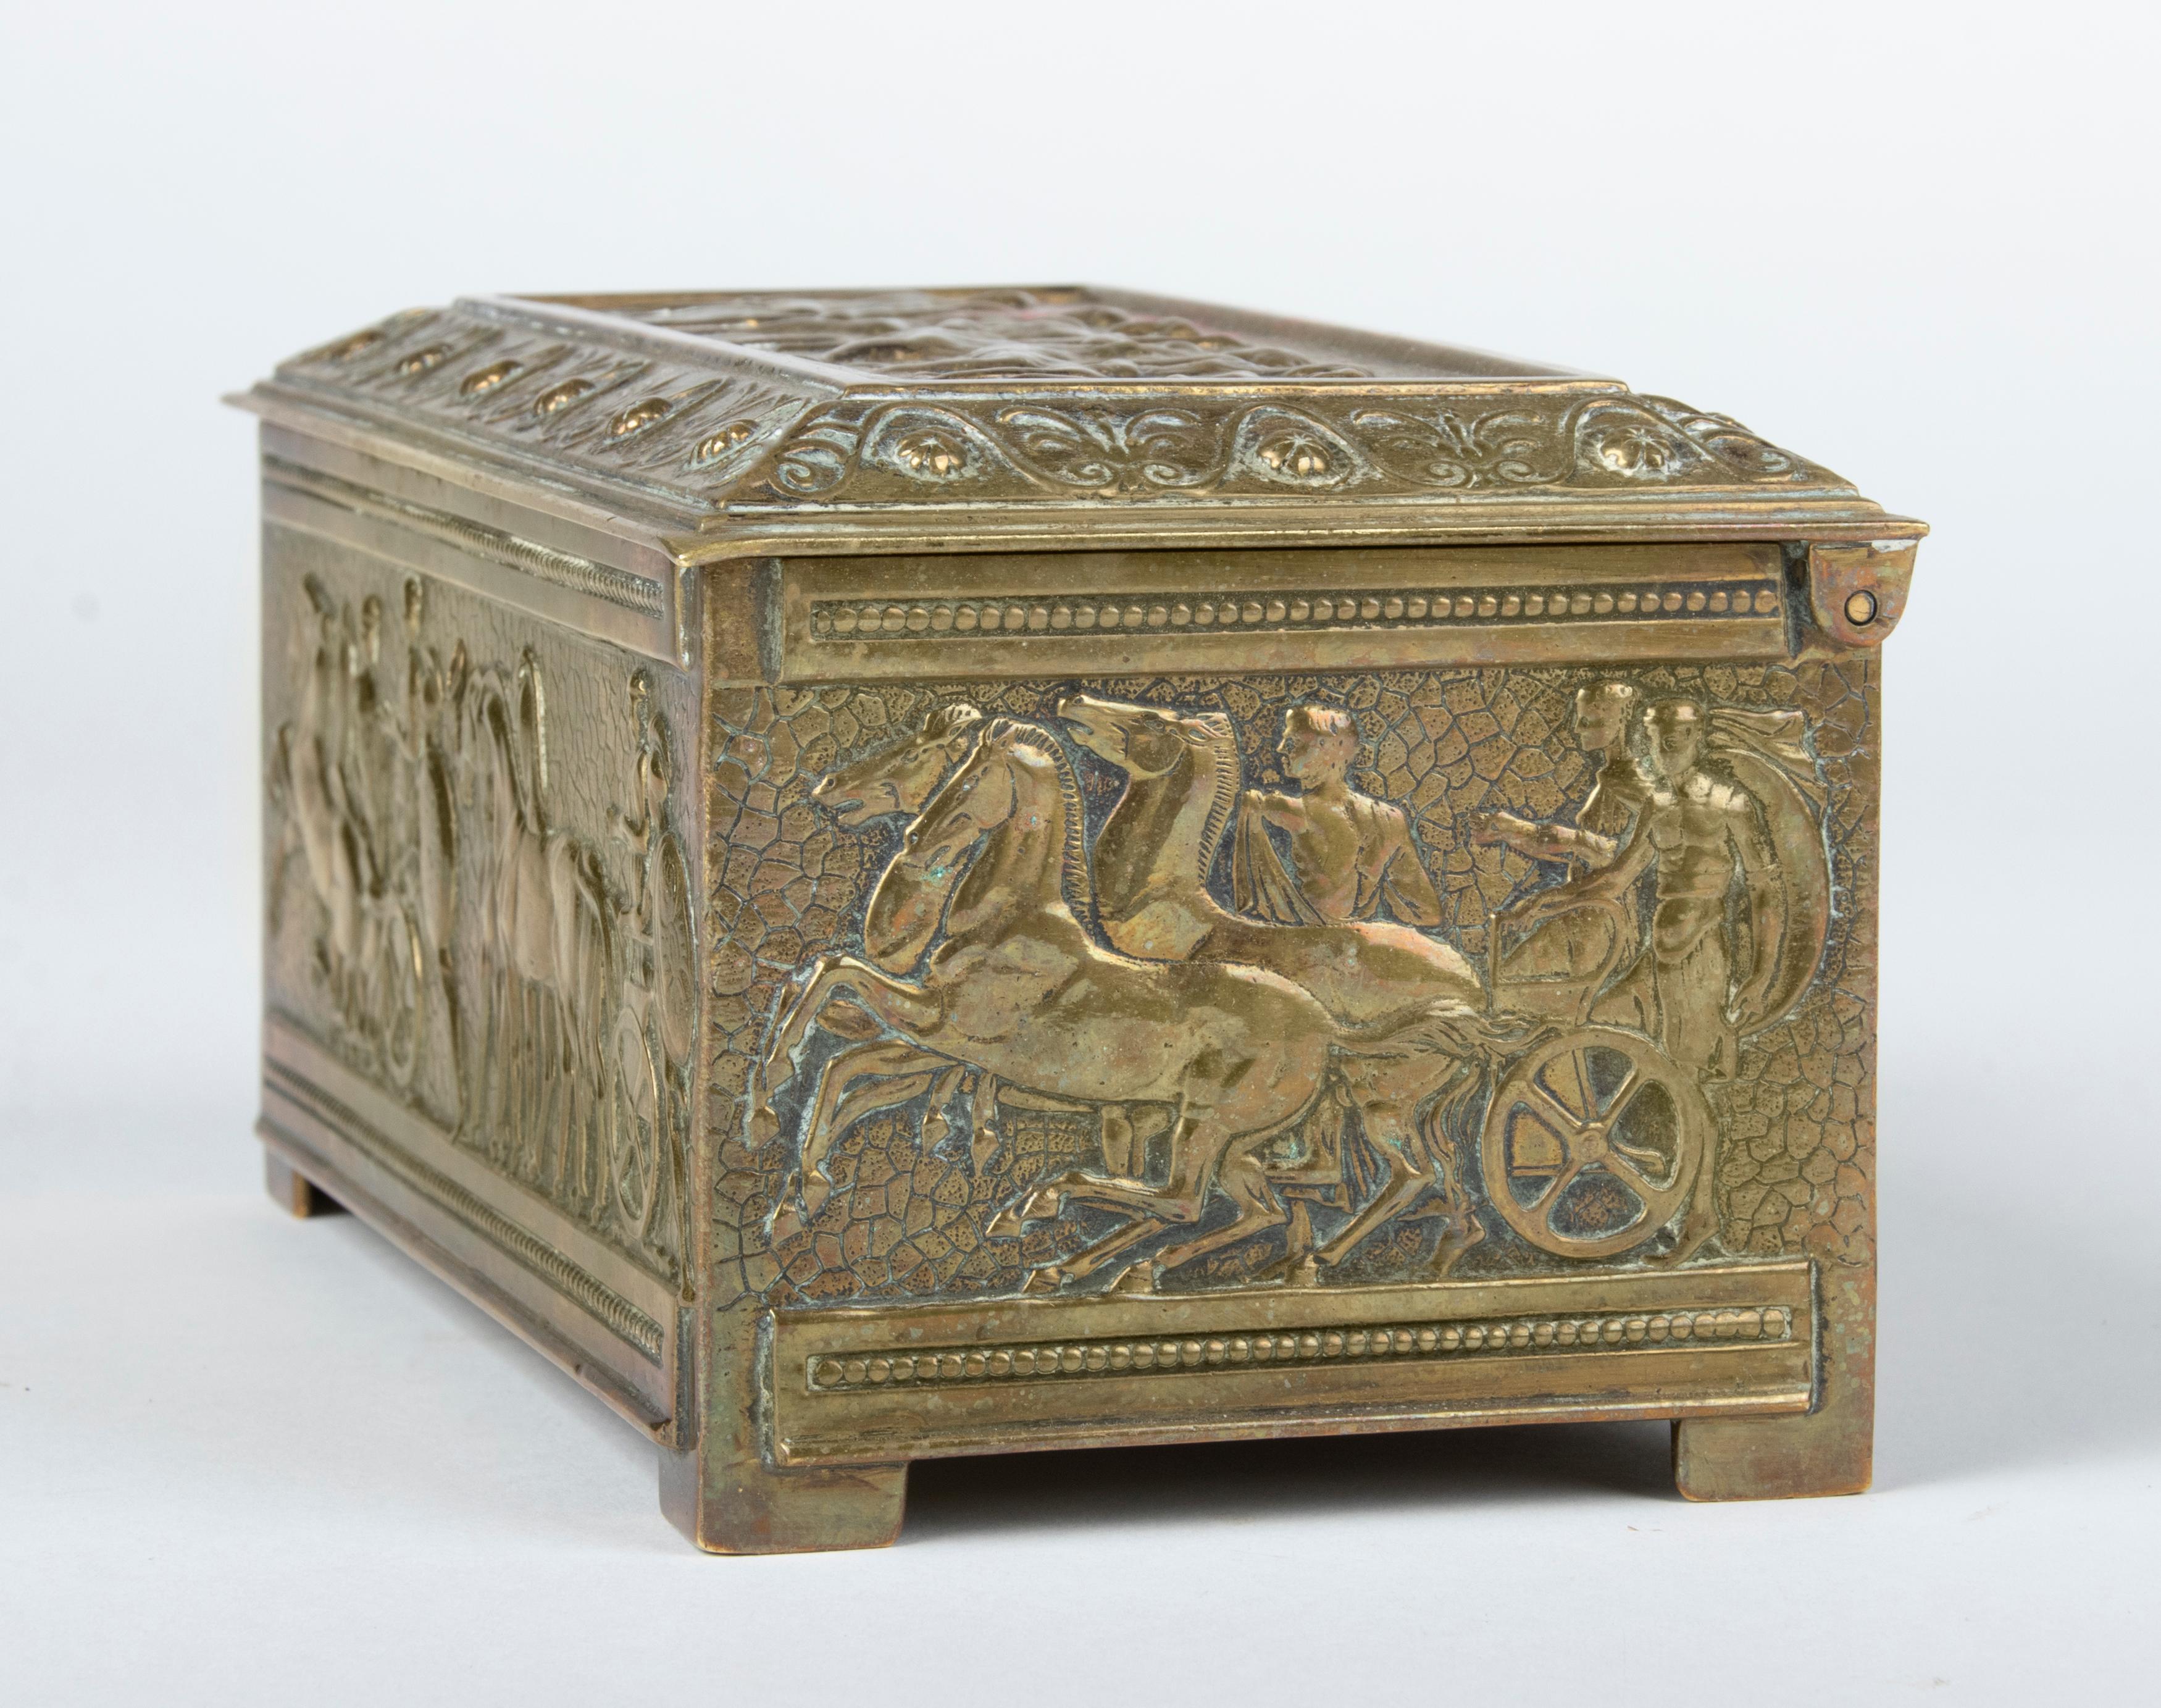 Cast Early 20th Century Brass Jewelry Box with Roman Empire Scenes